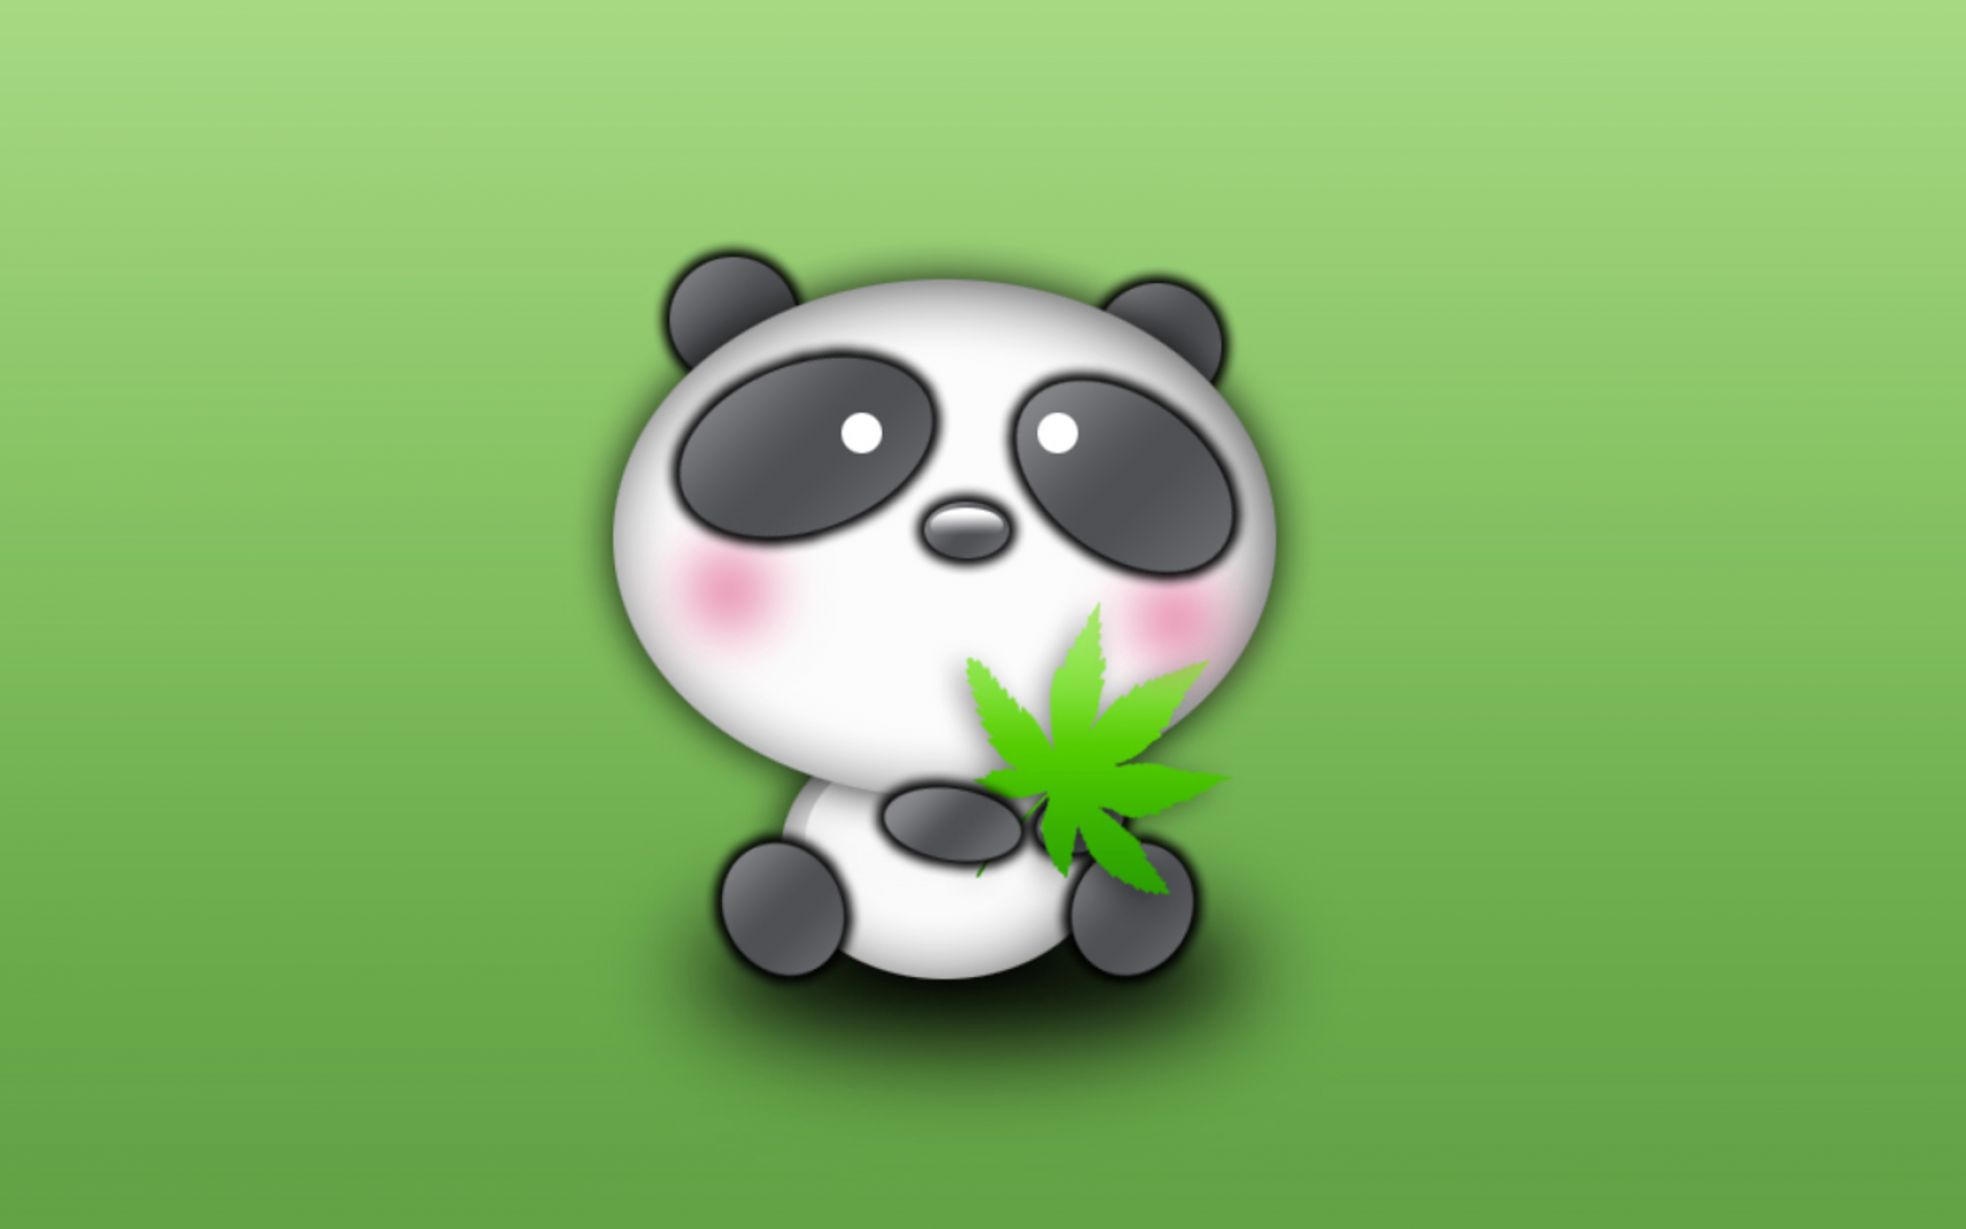 Cute baby panda cartoon pictures 3 1966x1229